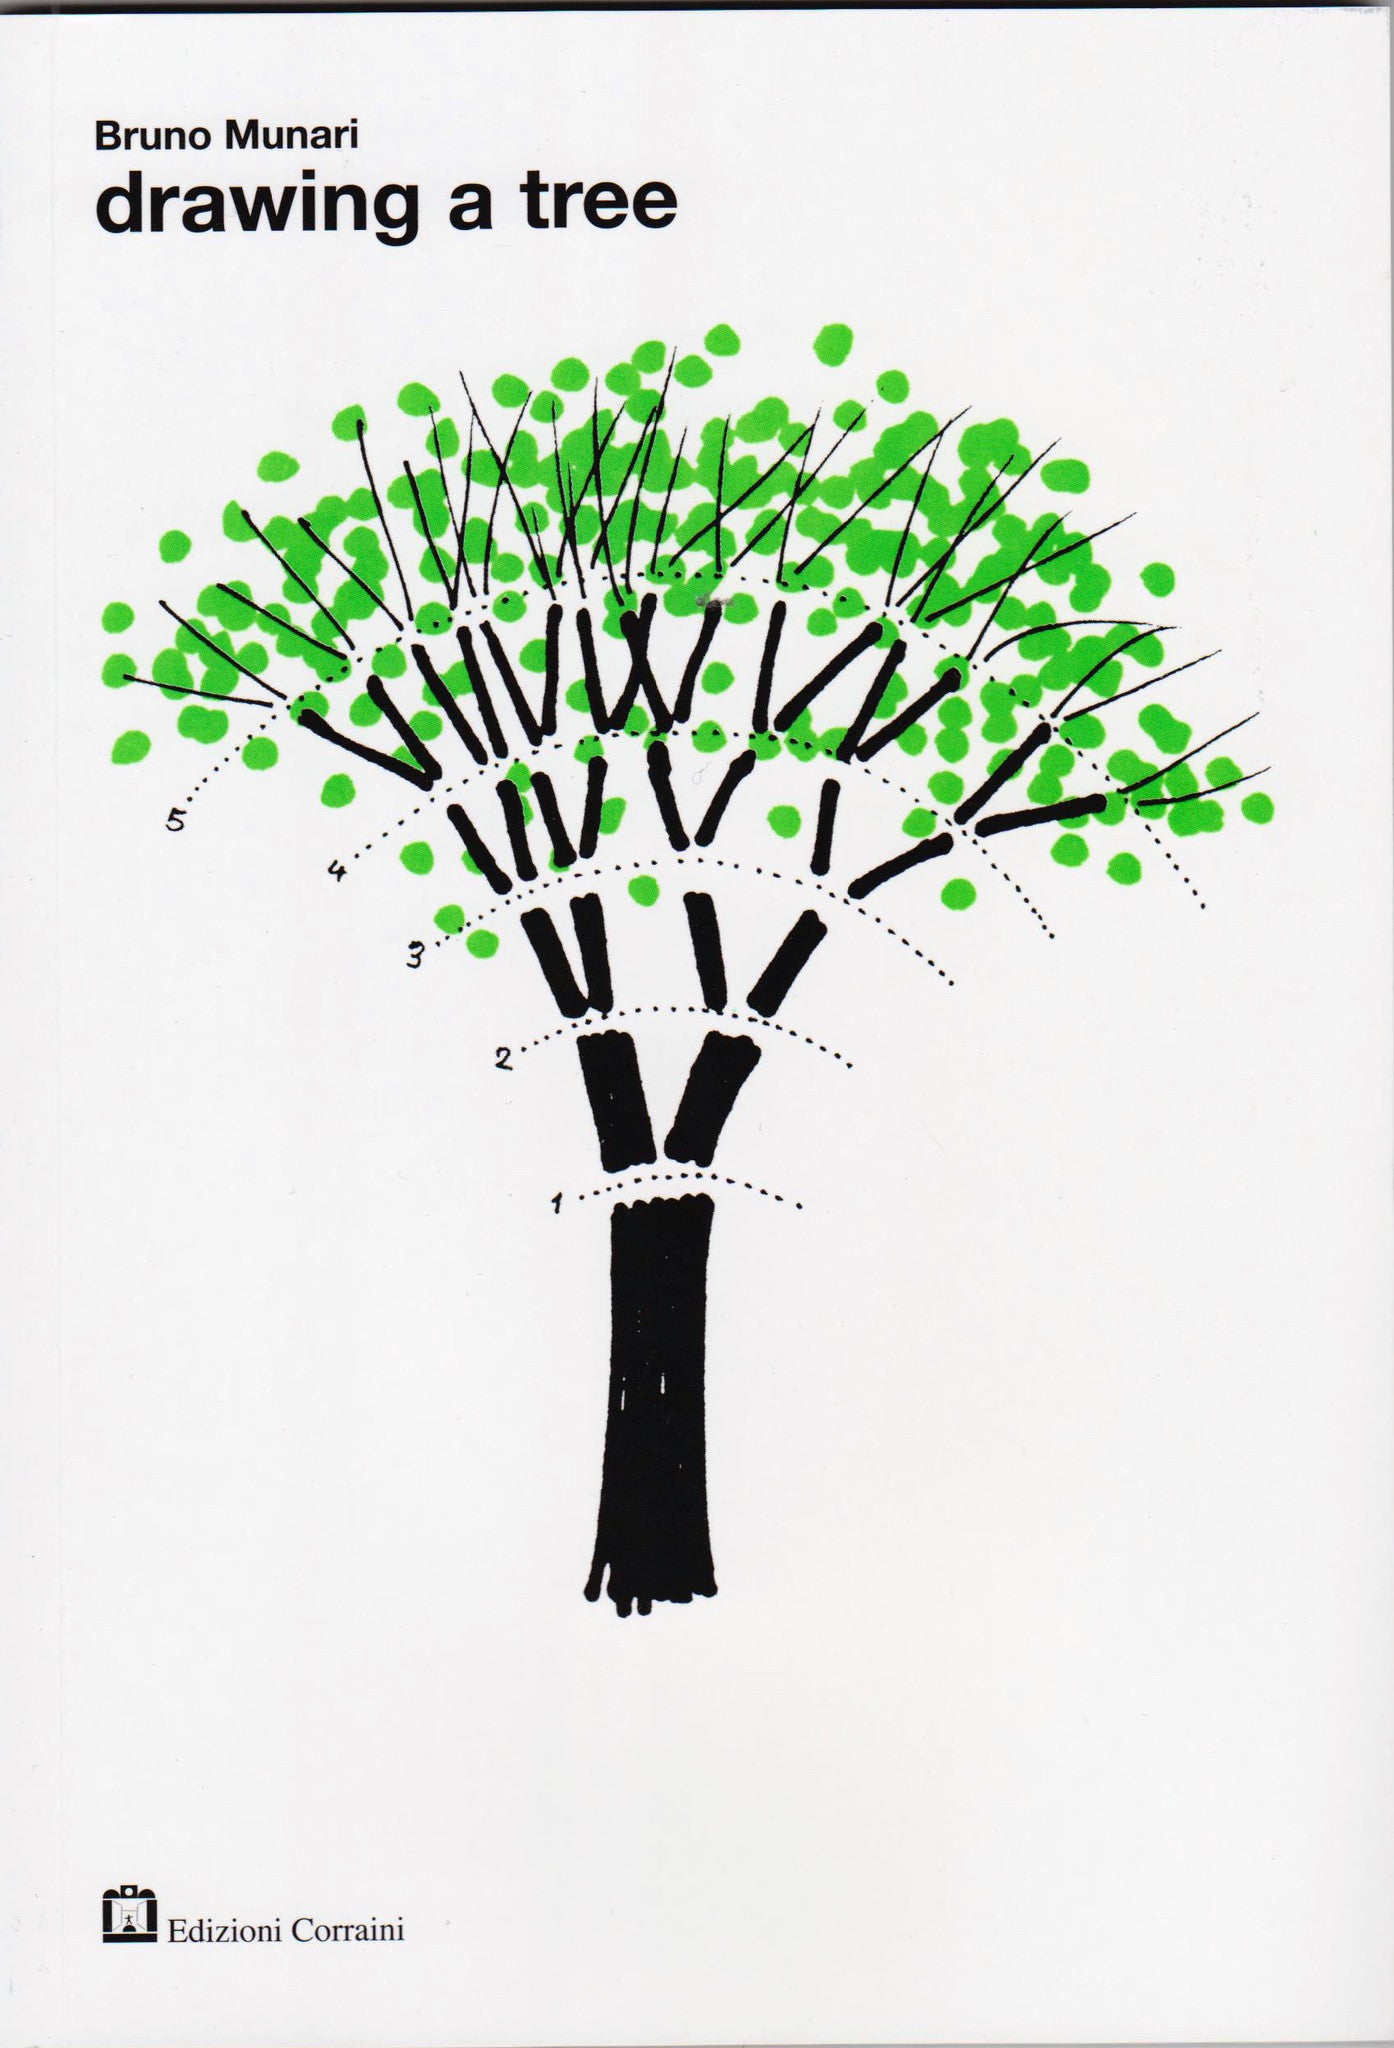 Drawing a tree (2004, Edizioni Corraini)